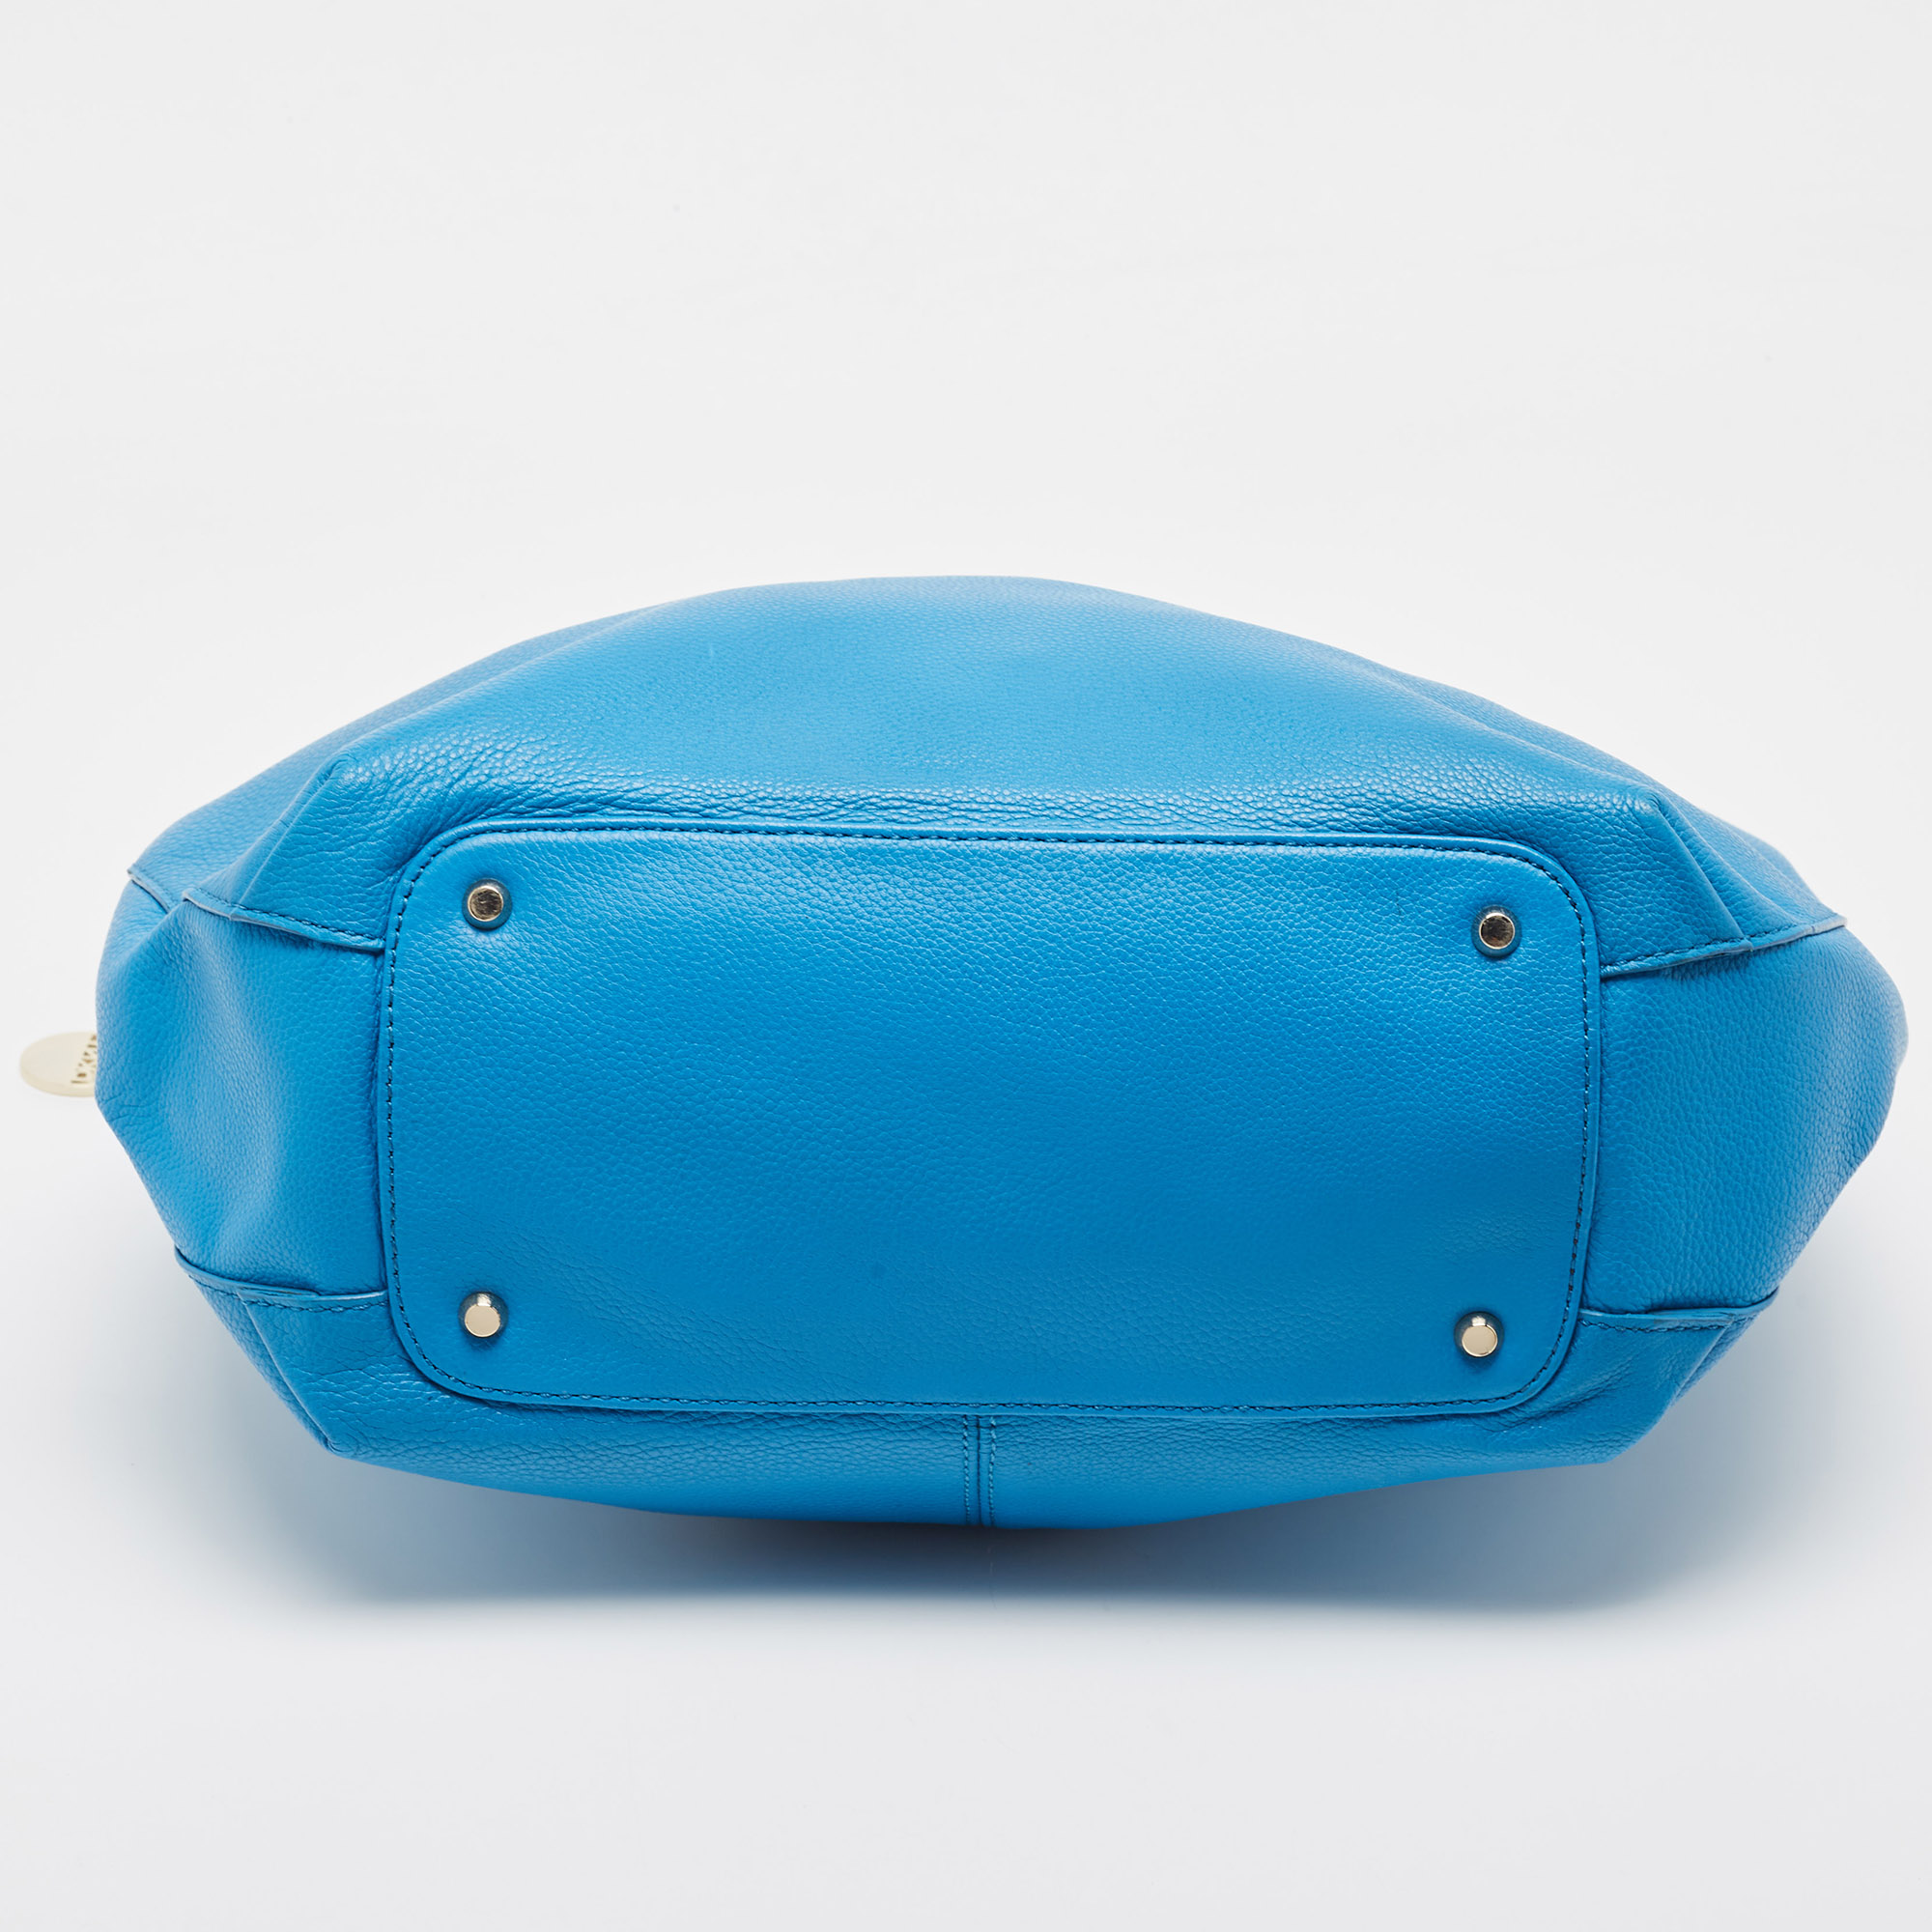 DKNY Blue Leather Buckle Embellished Hobo